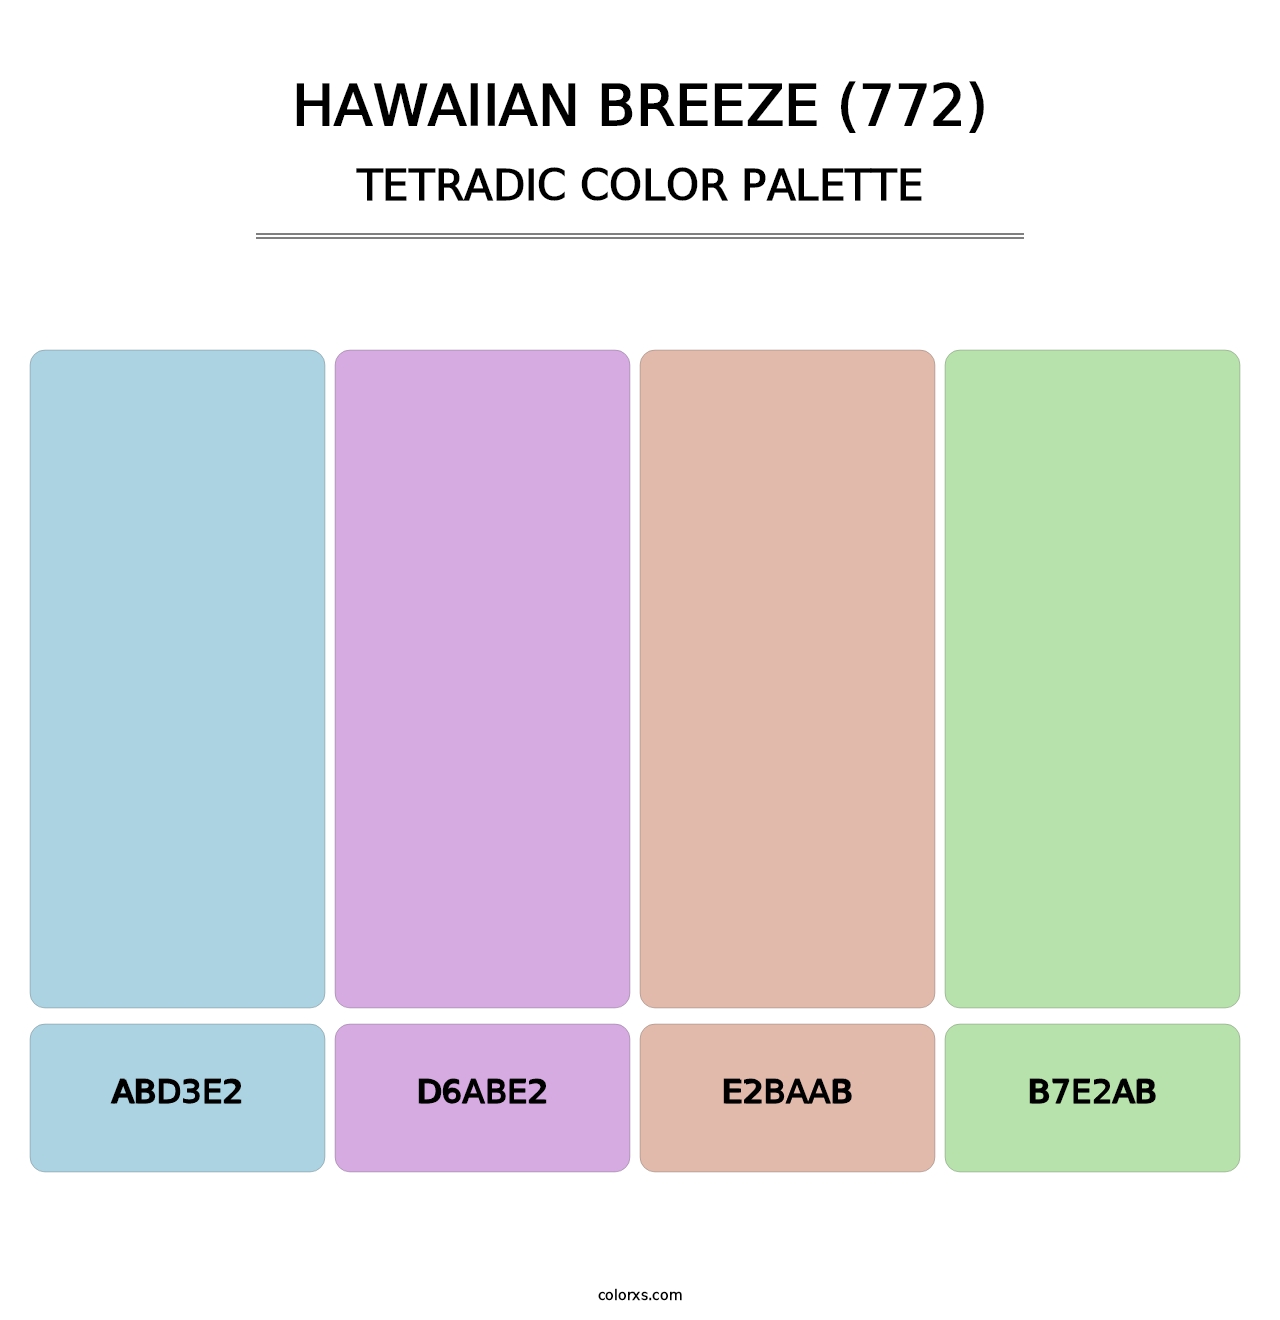 Hawaiian Breeze (772) - Tetradic Color Palette